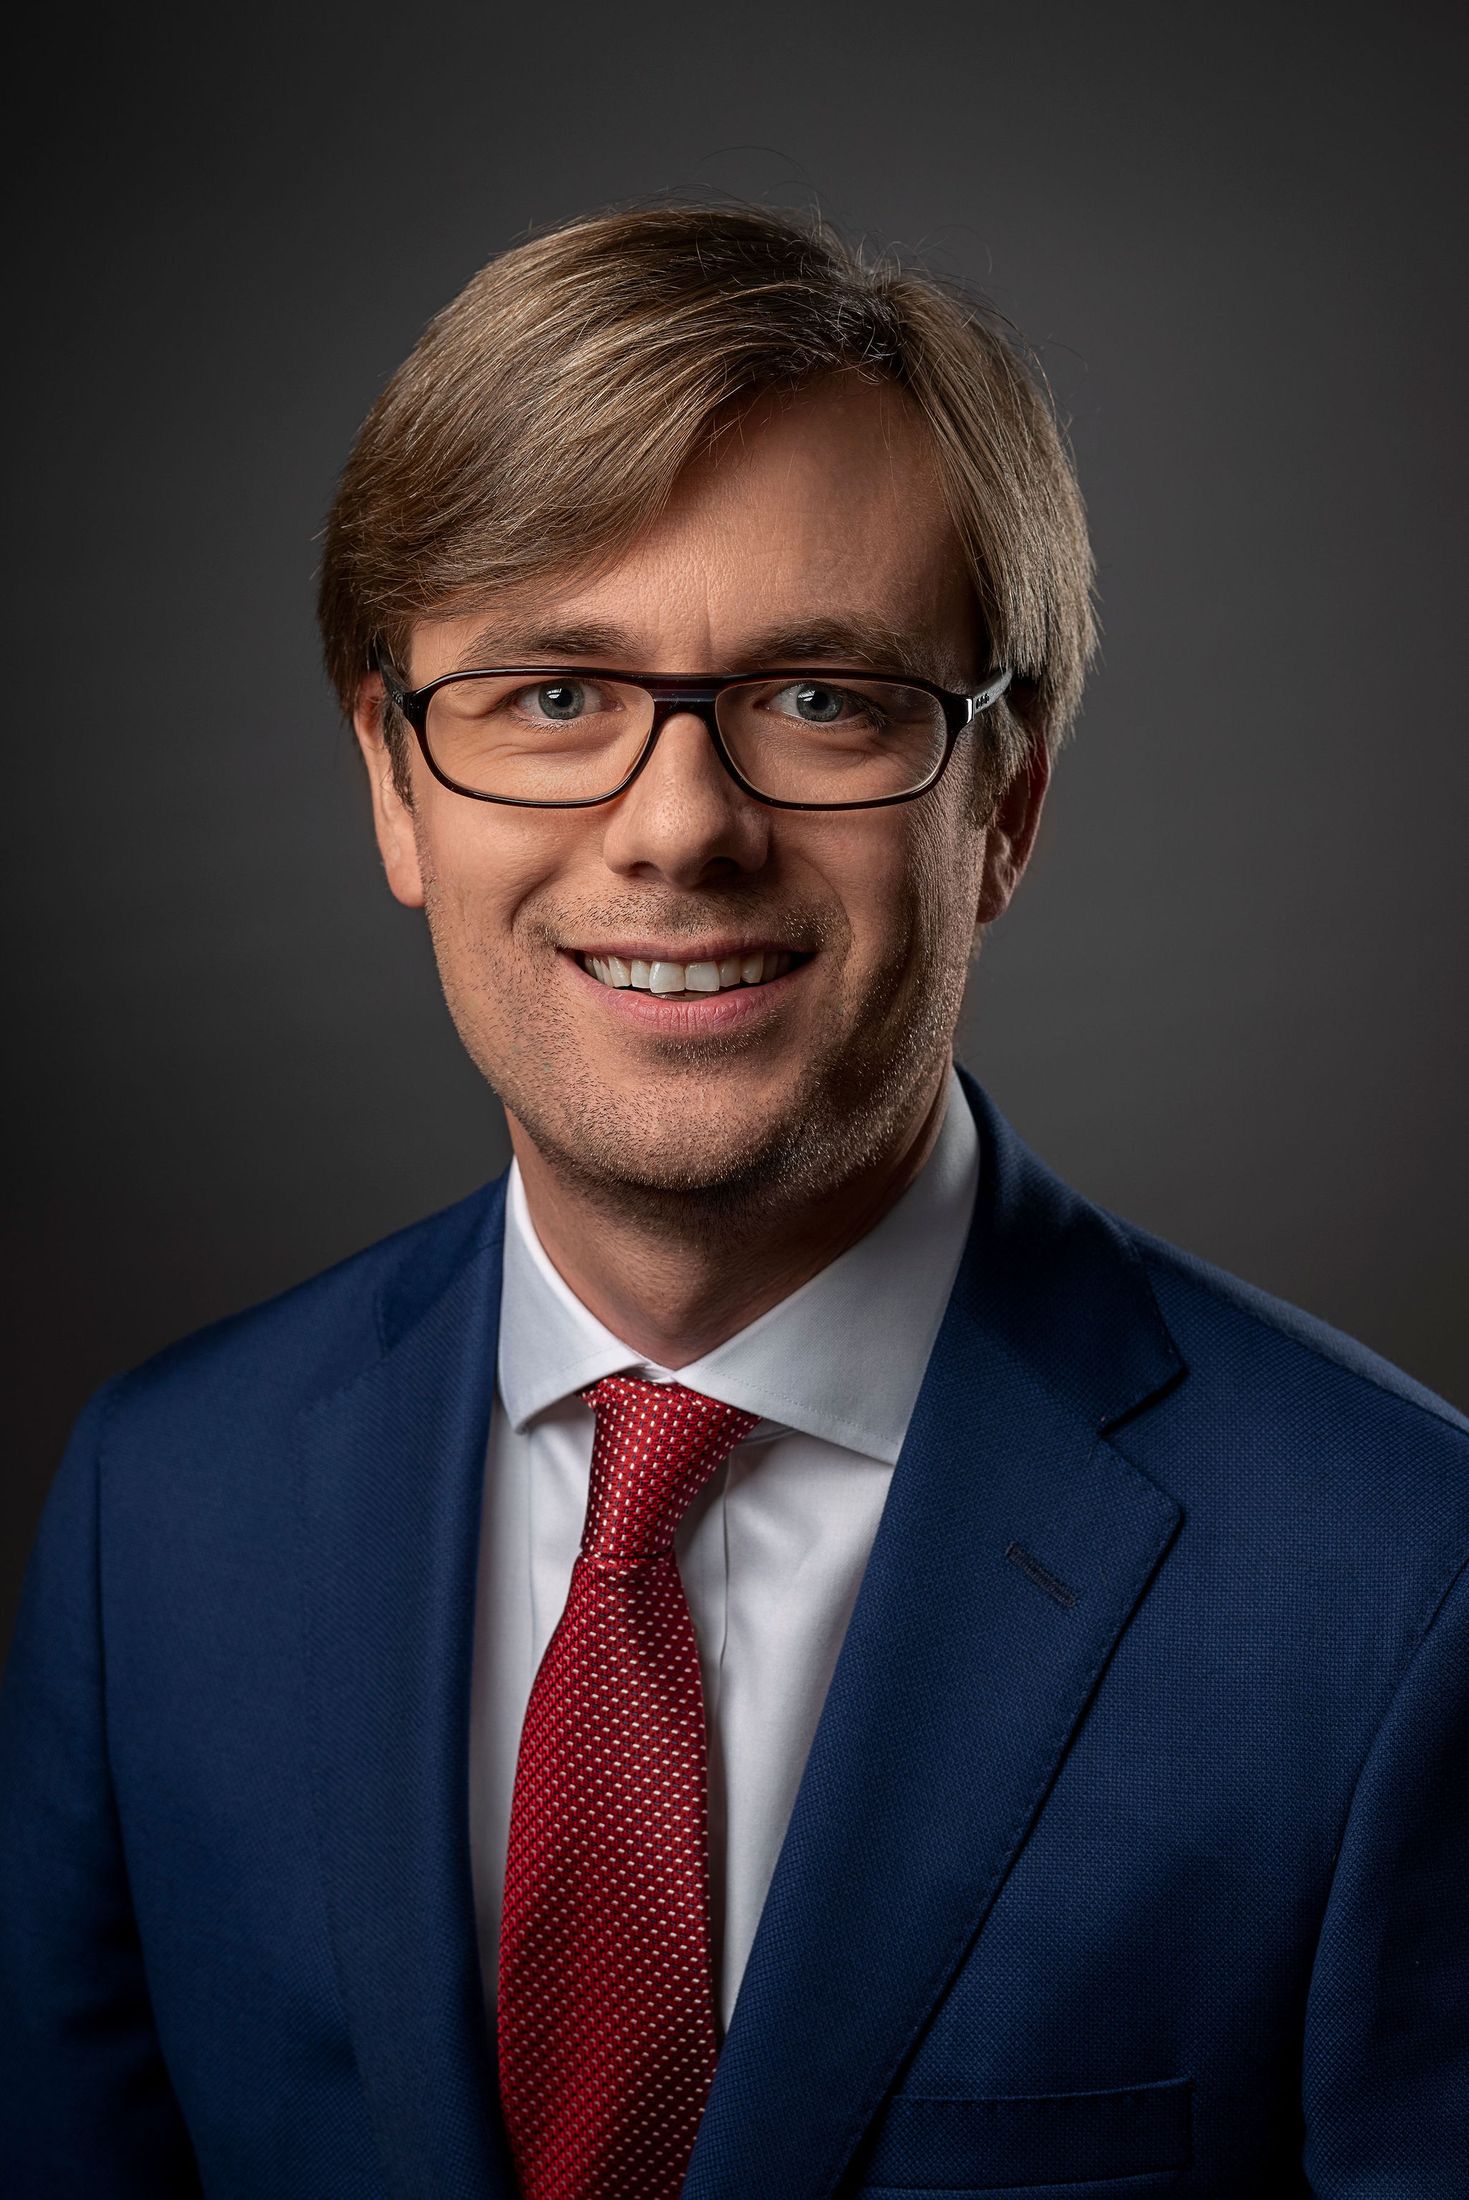 Adrian Schulz, Executive Vice President at Centum